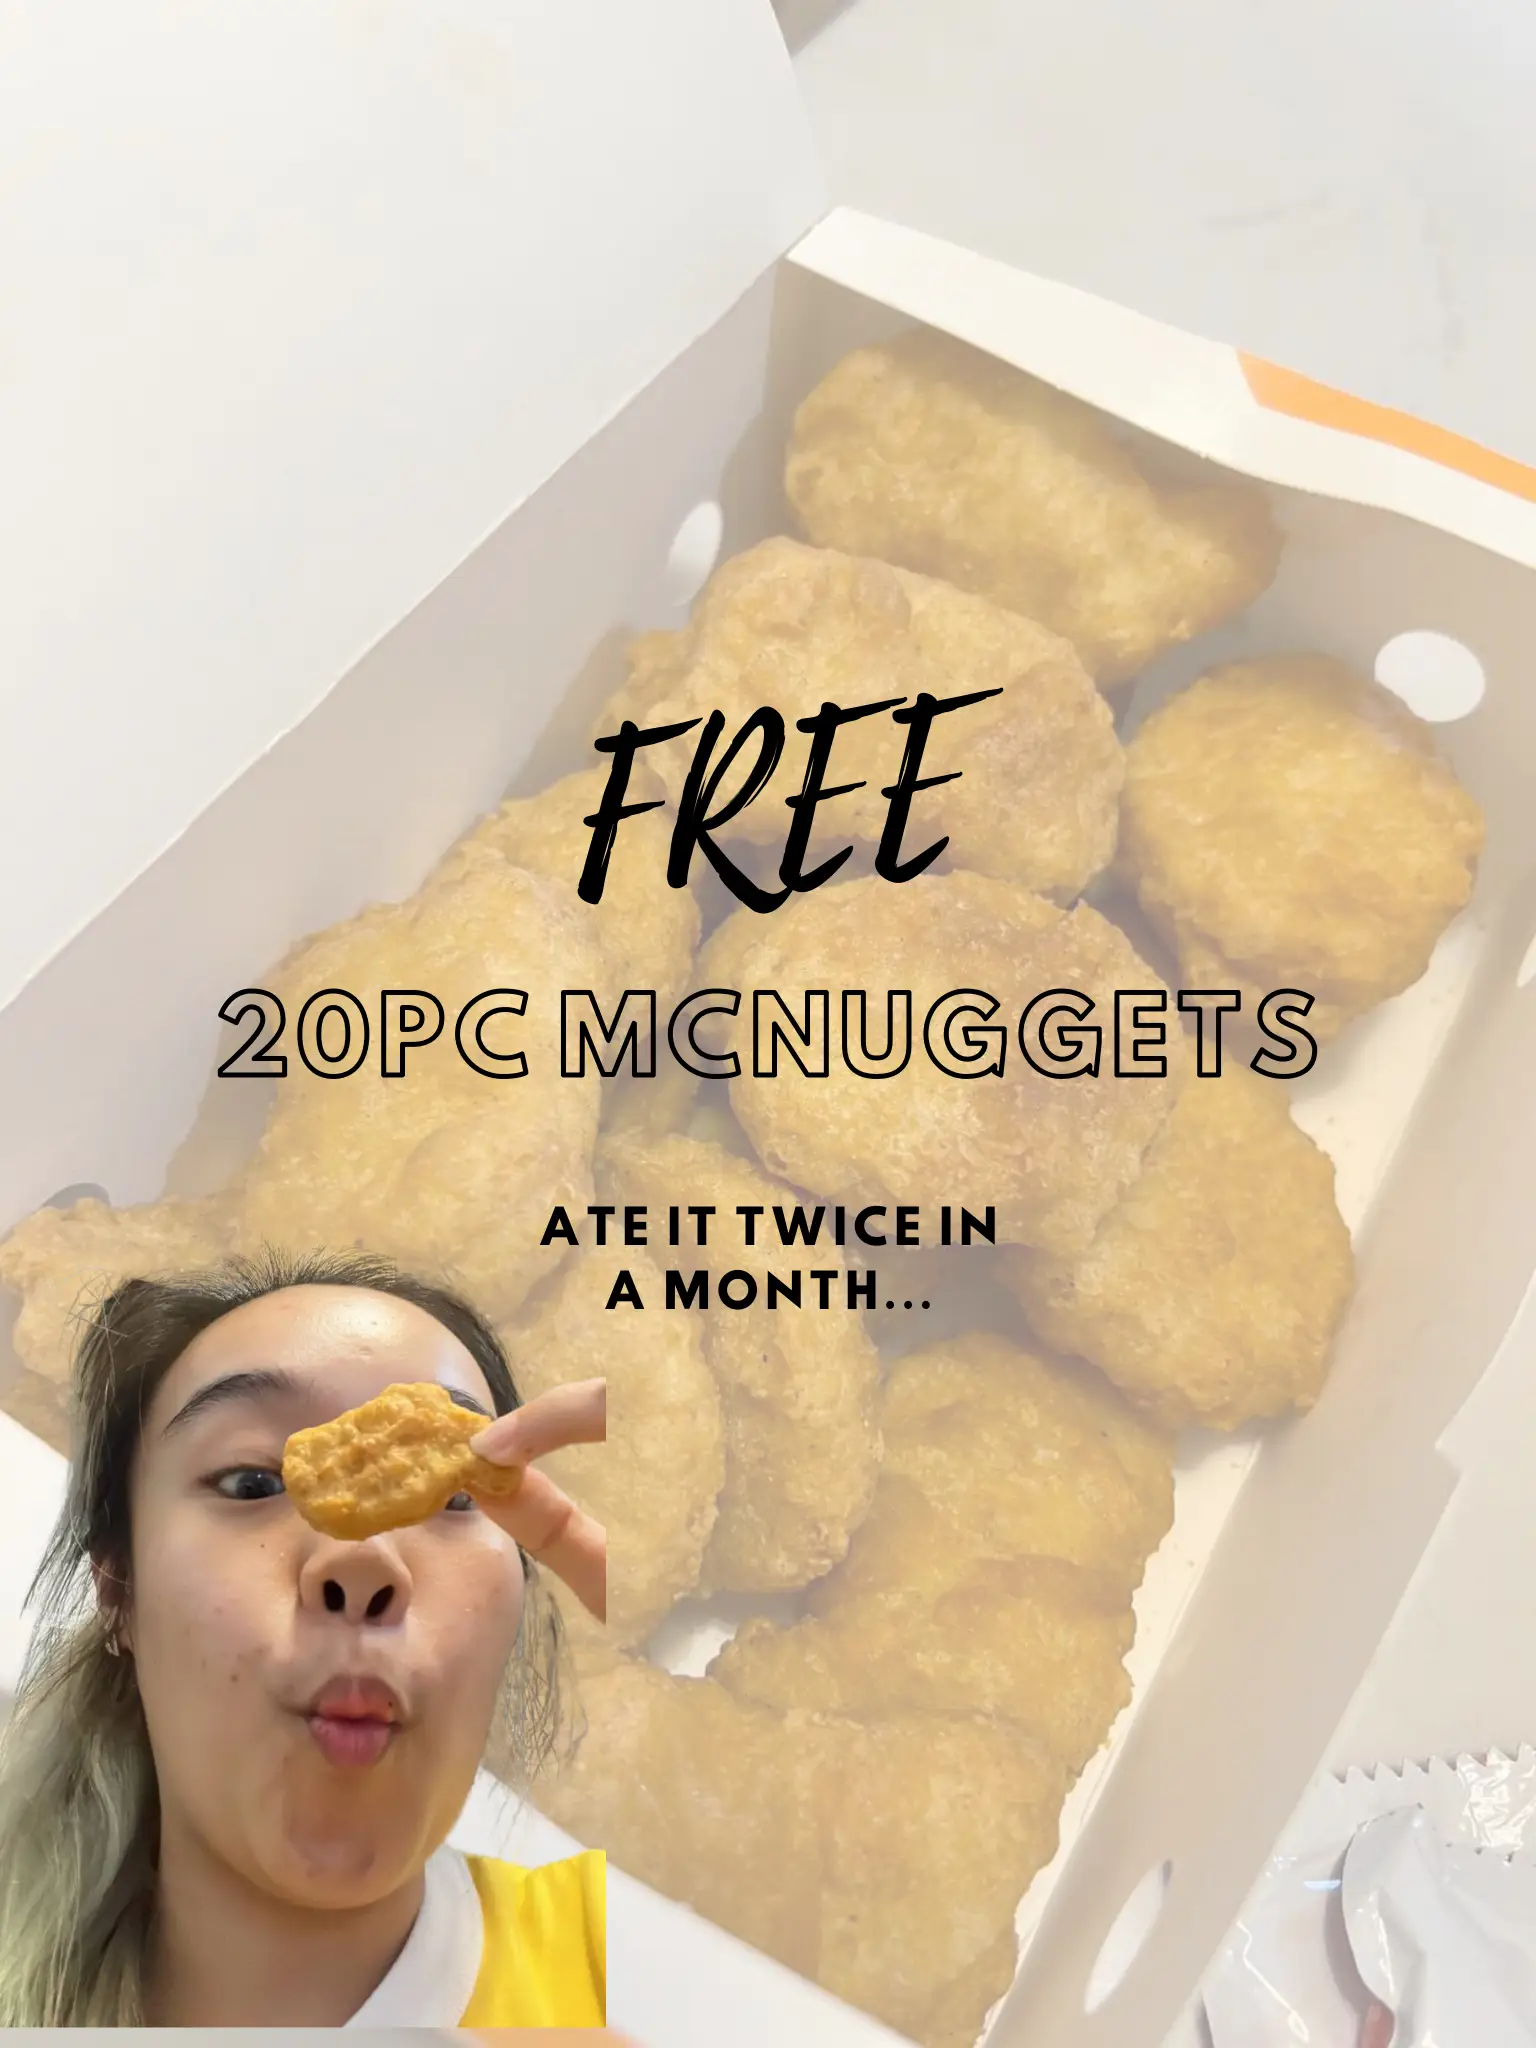 Mcdonalds Birthday Free Nuggets - Lemon8 Search